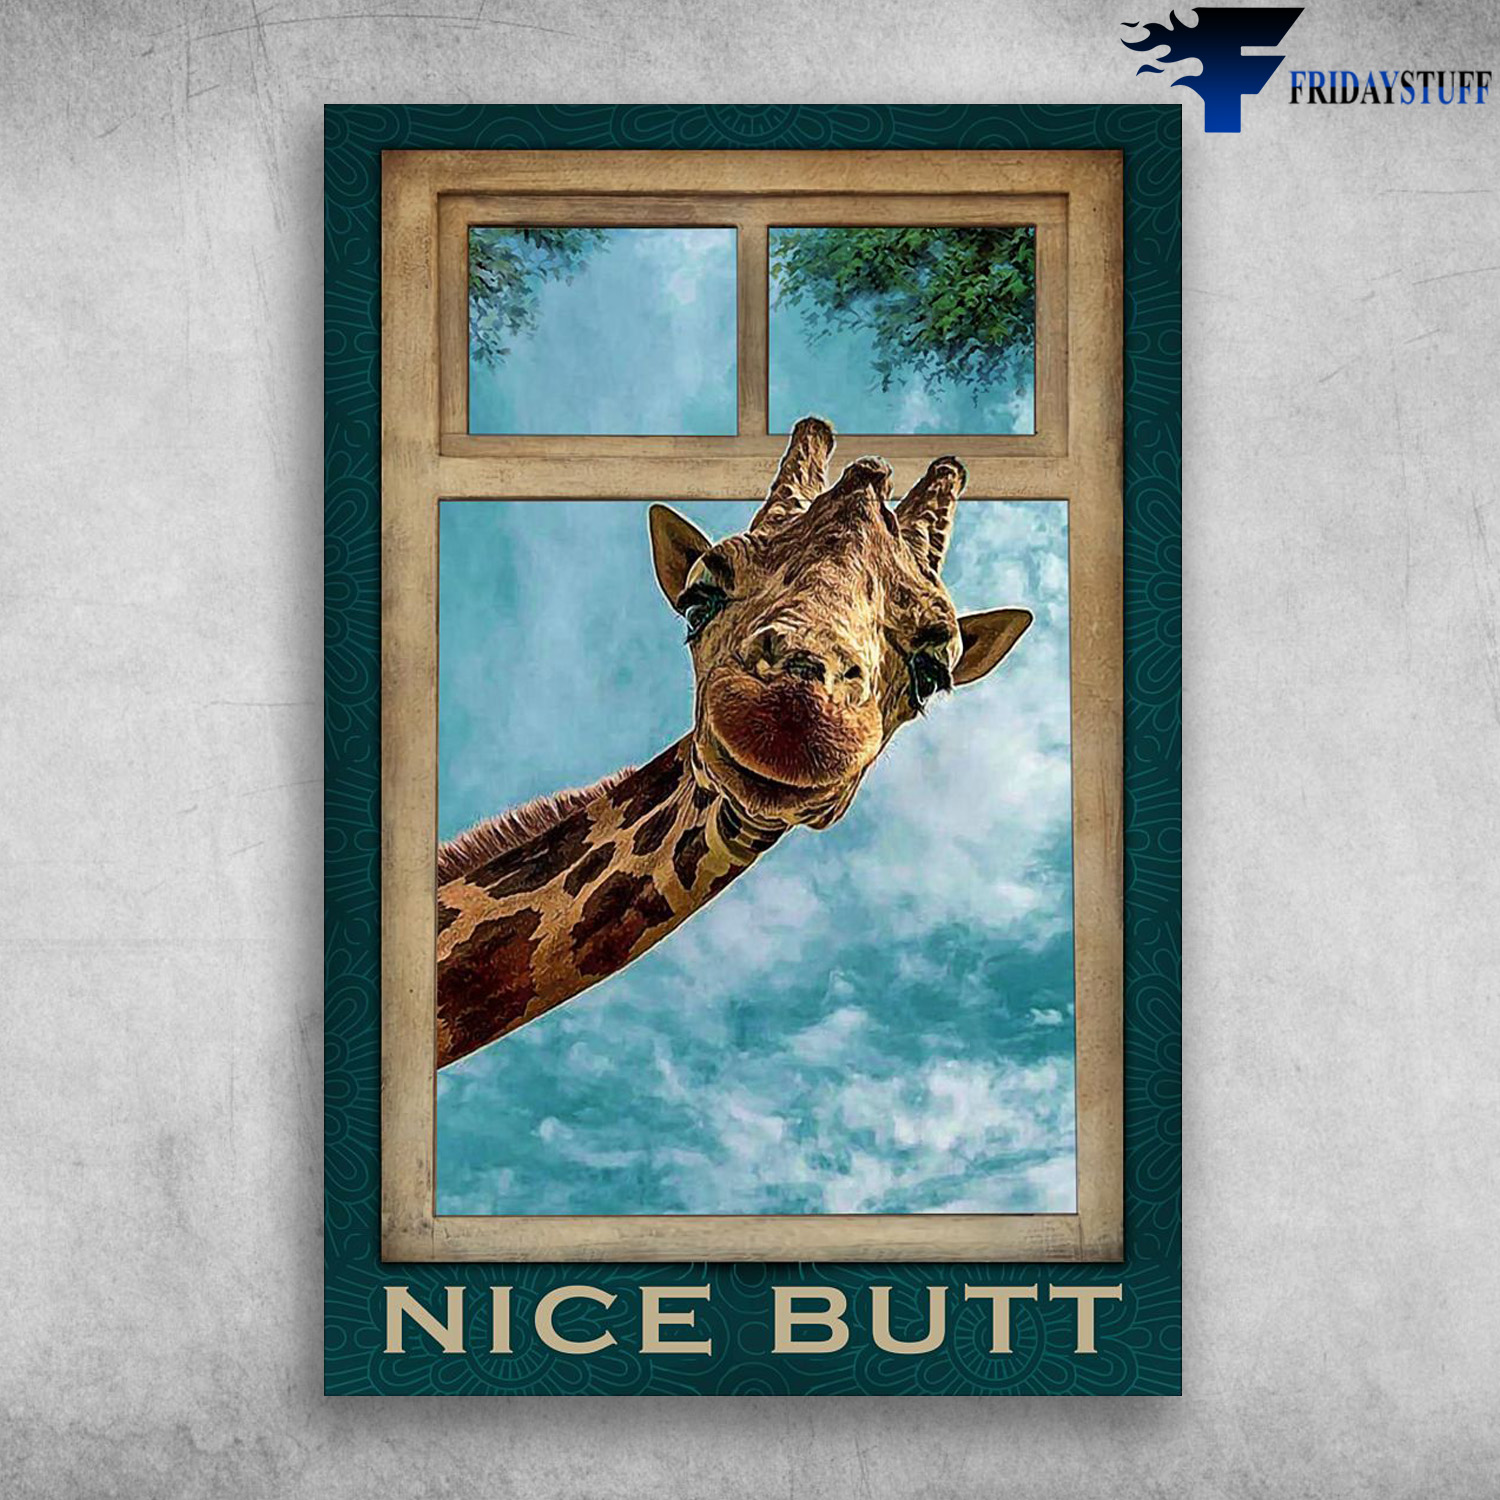 The Giraffe Out Side The Window - Nice Butt